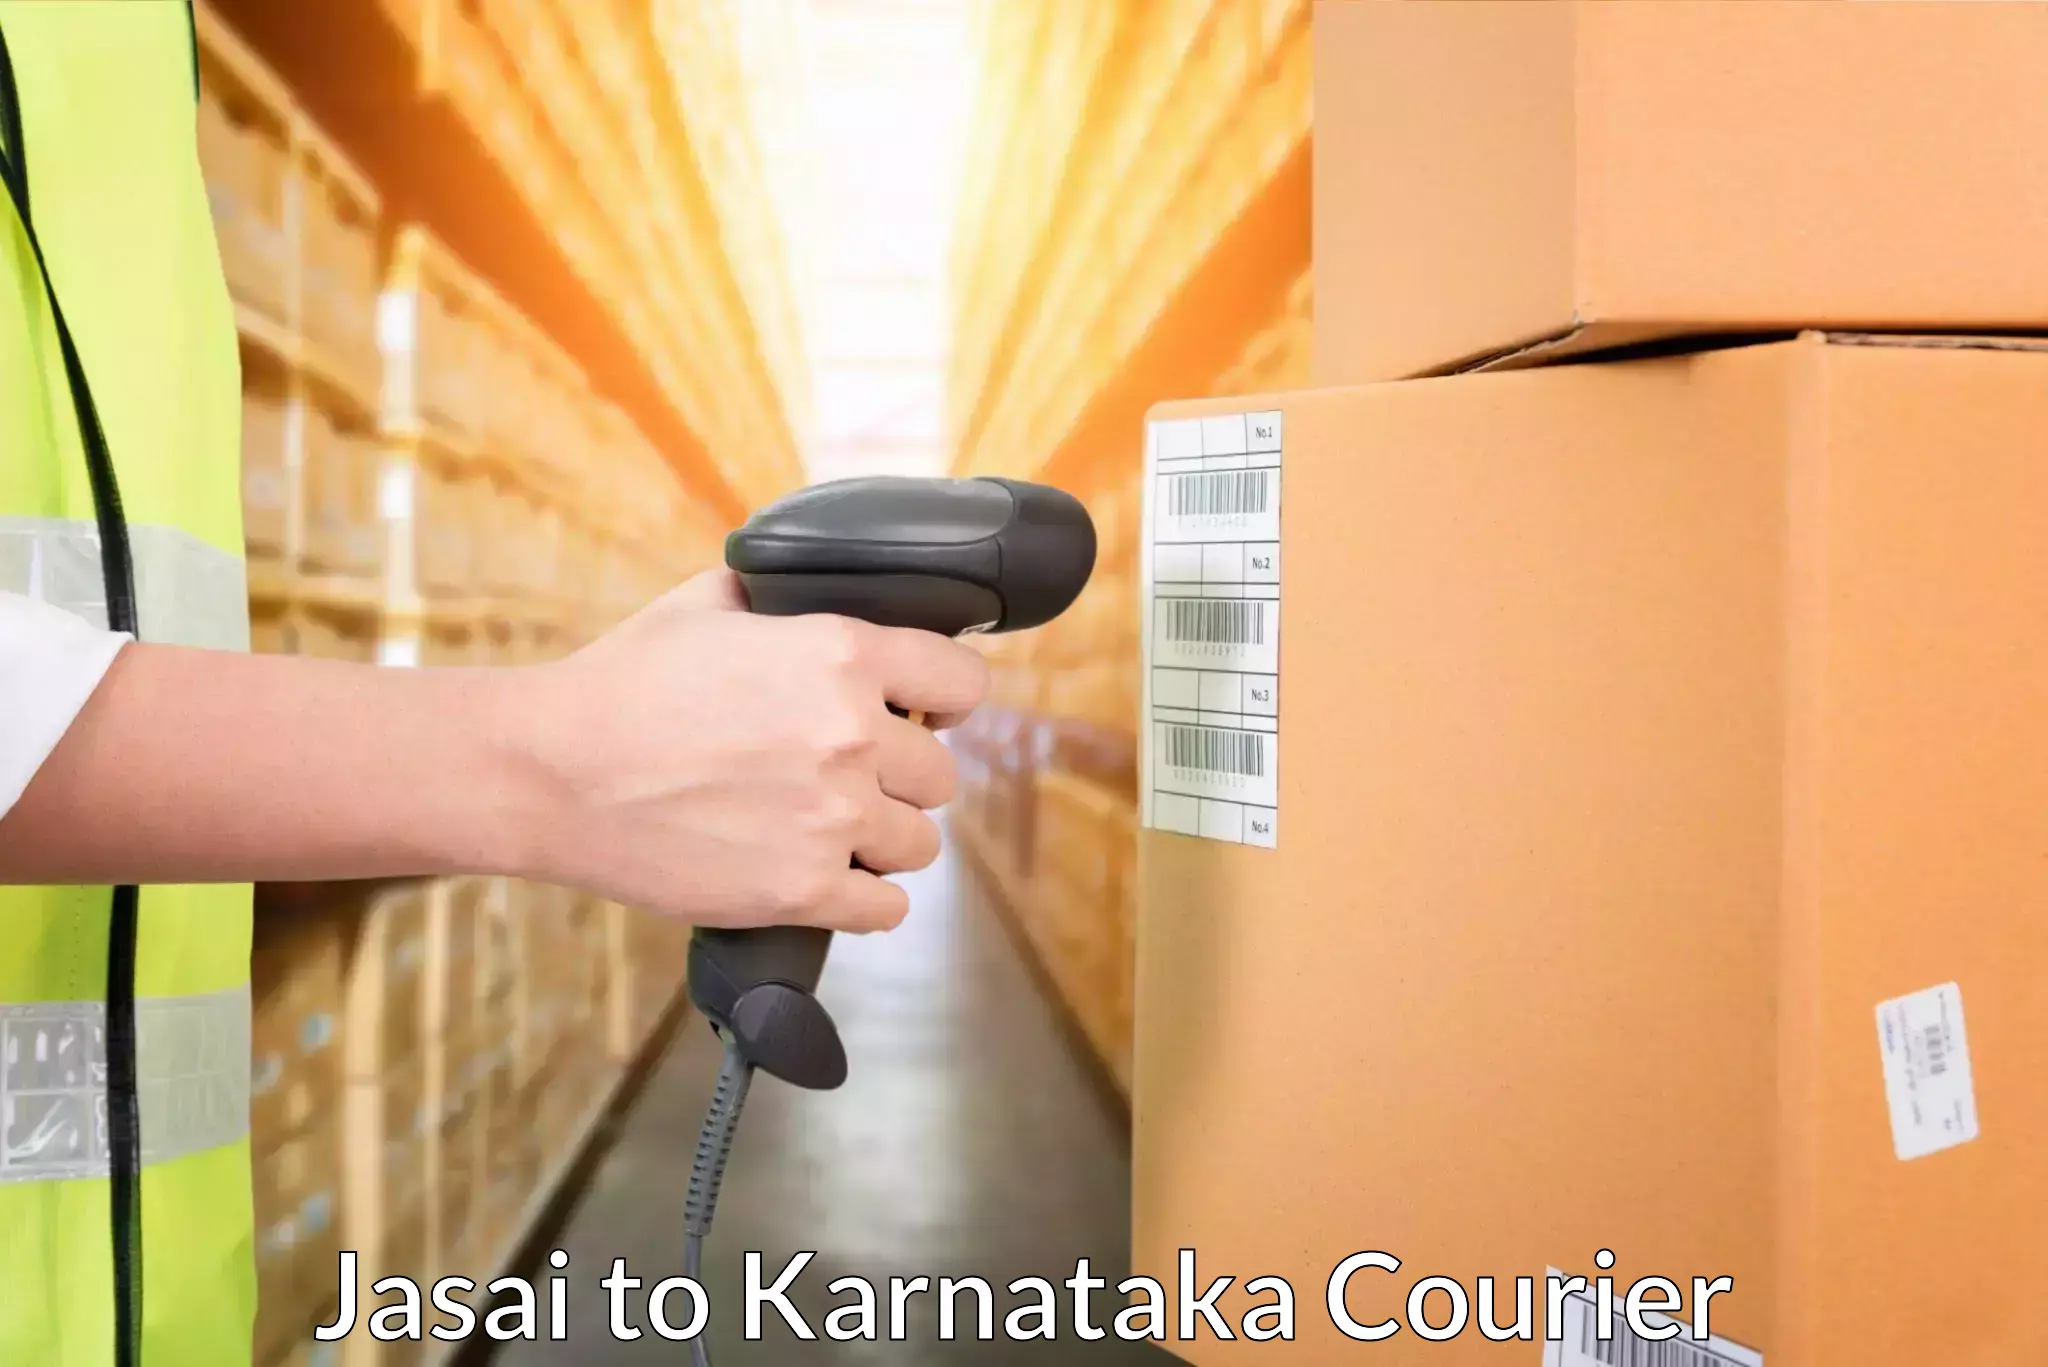 Efficient cargo handling Jasai to Karnataka